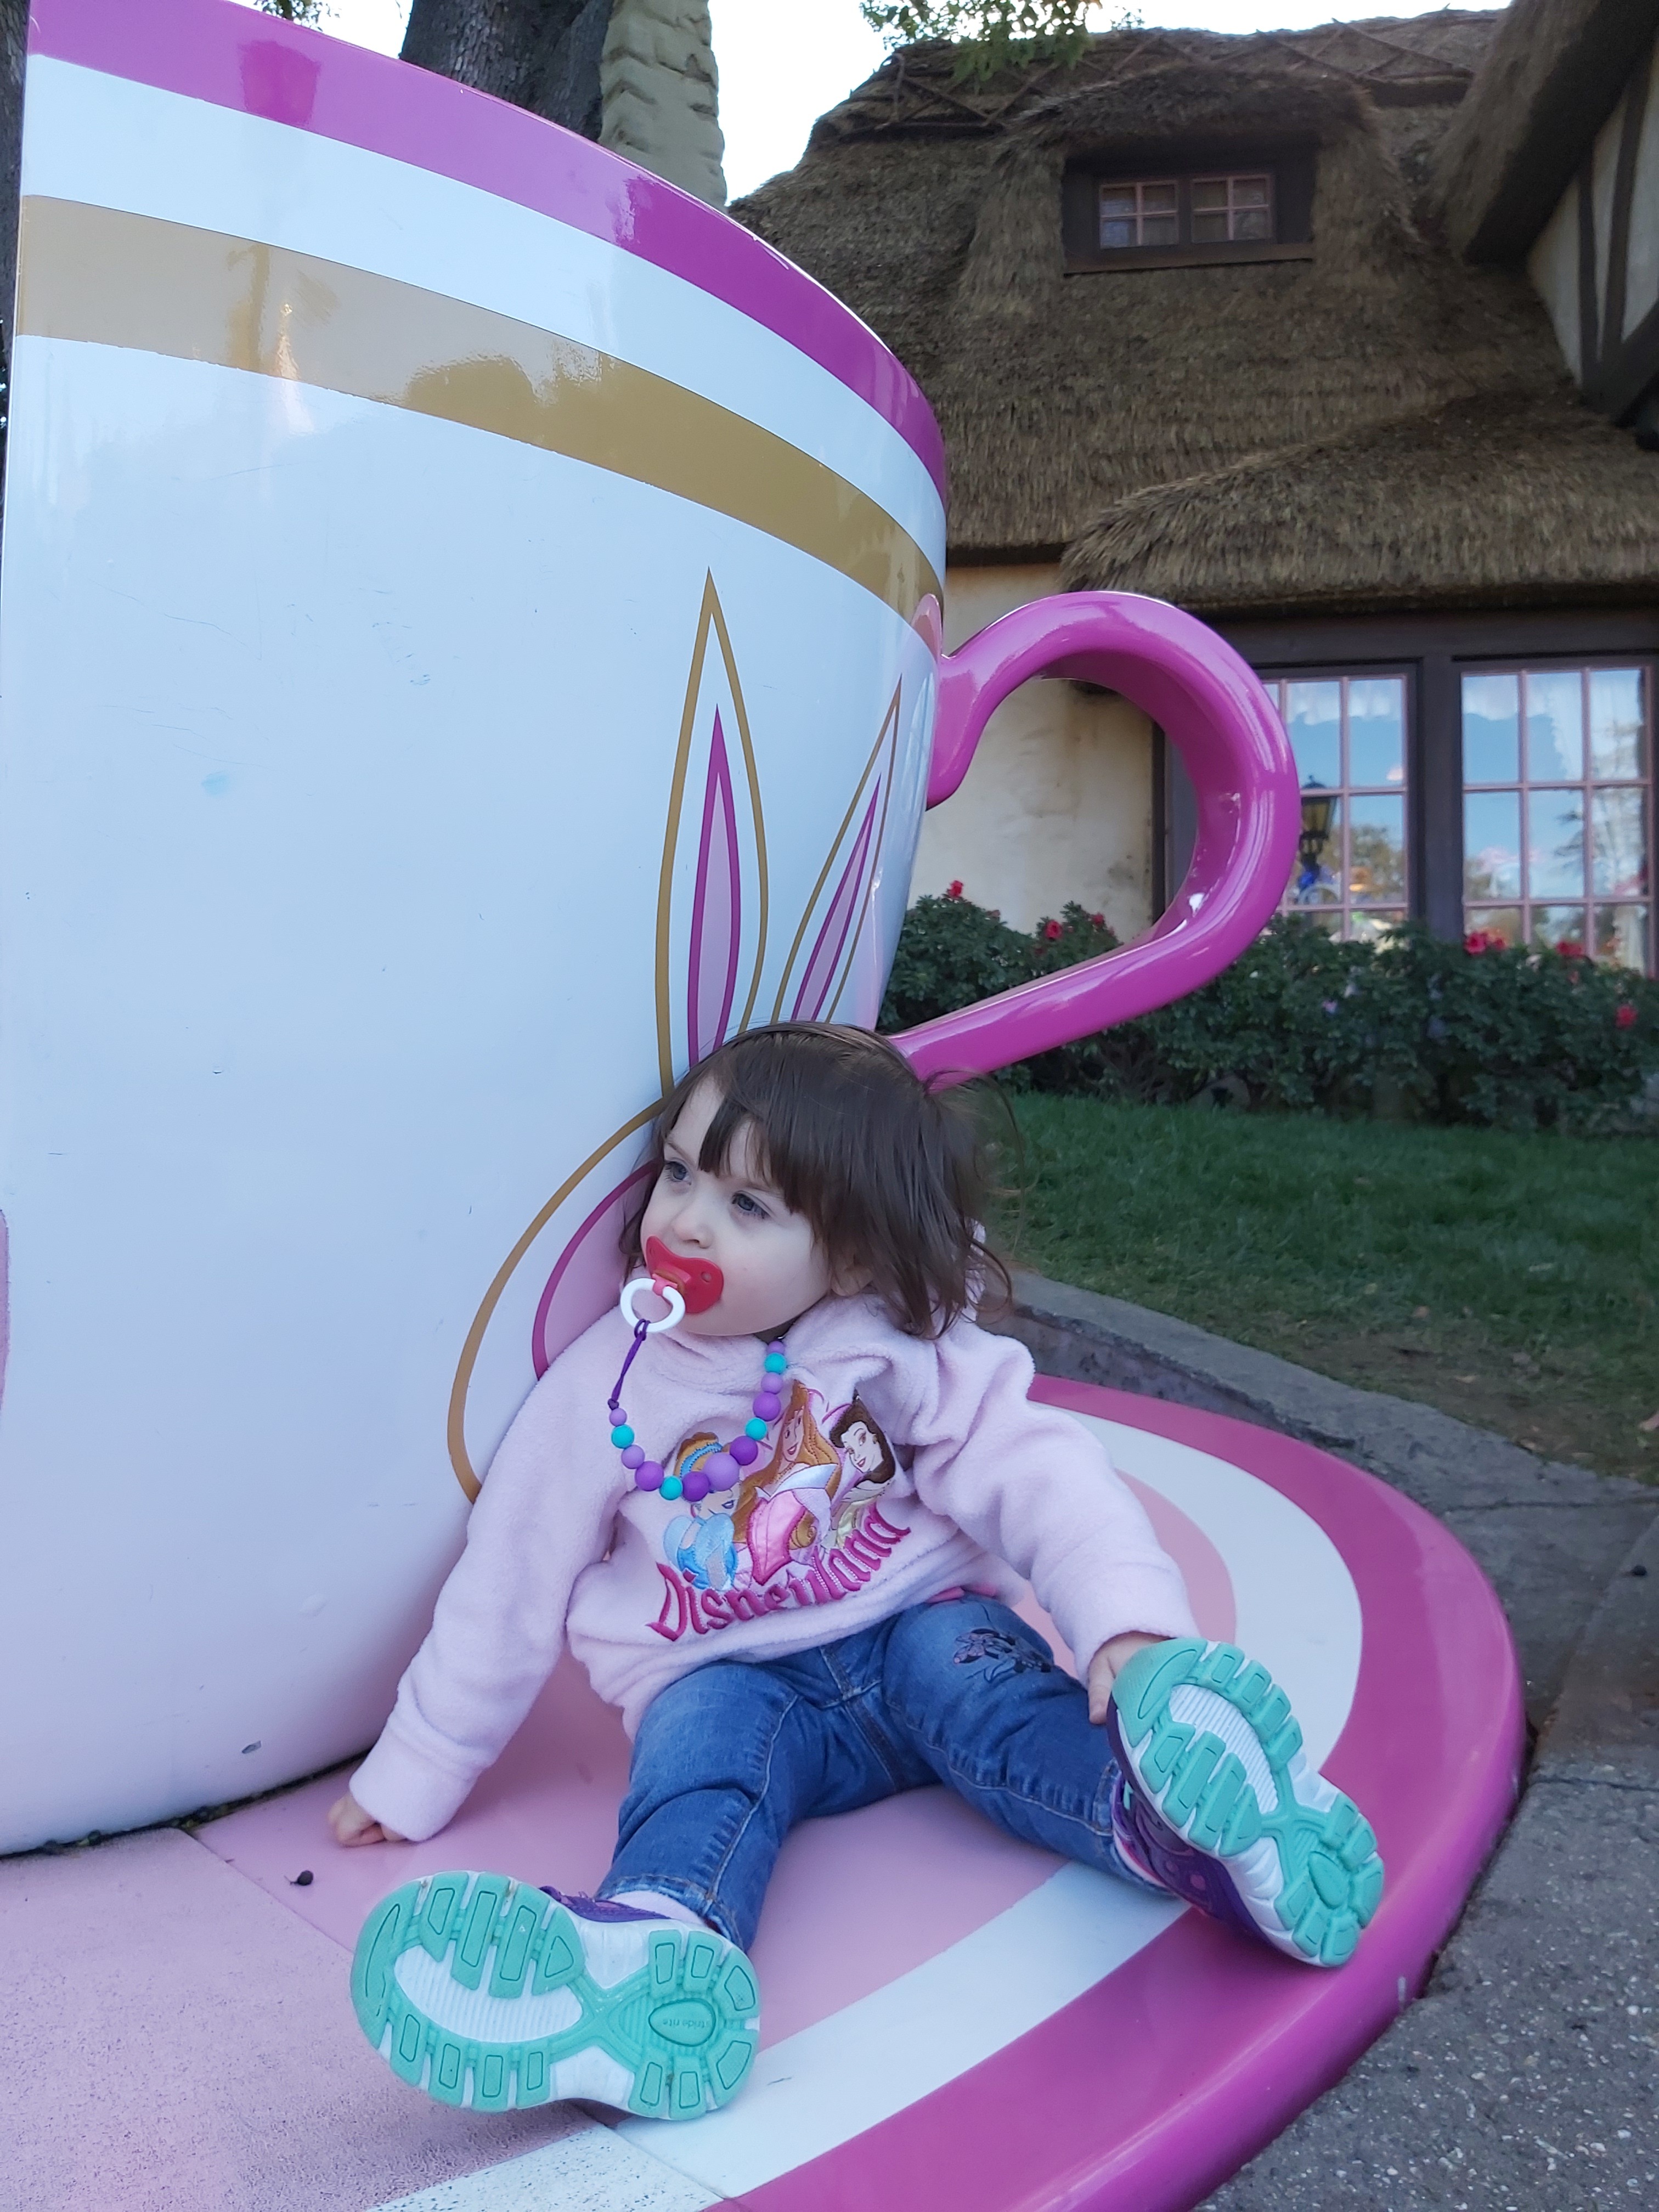 Tea Cup Ride at Disneyland